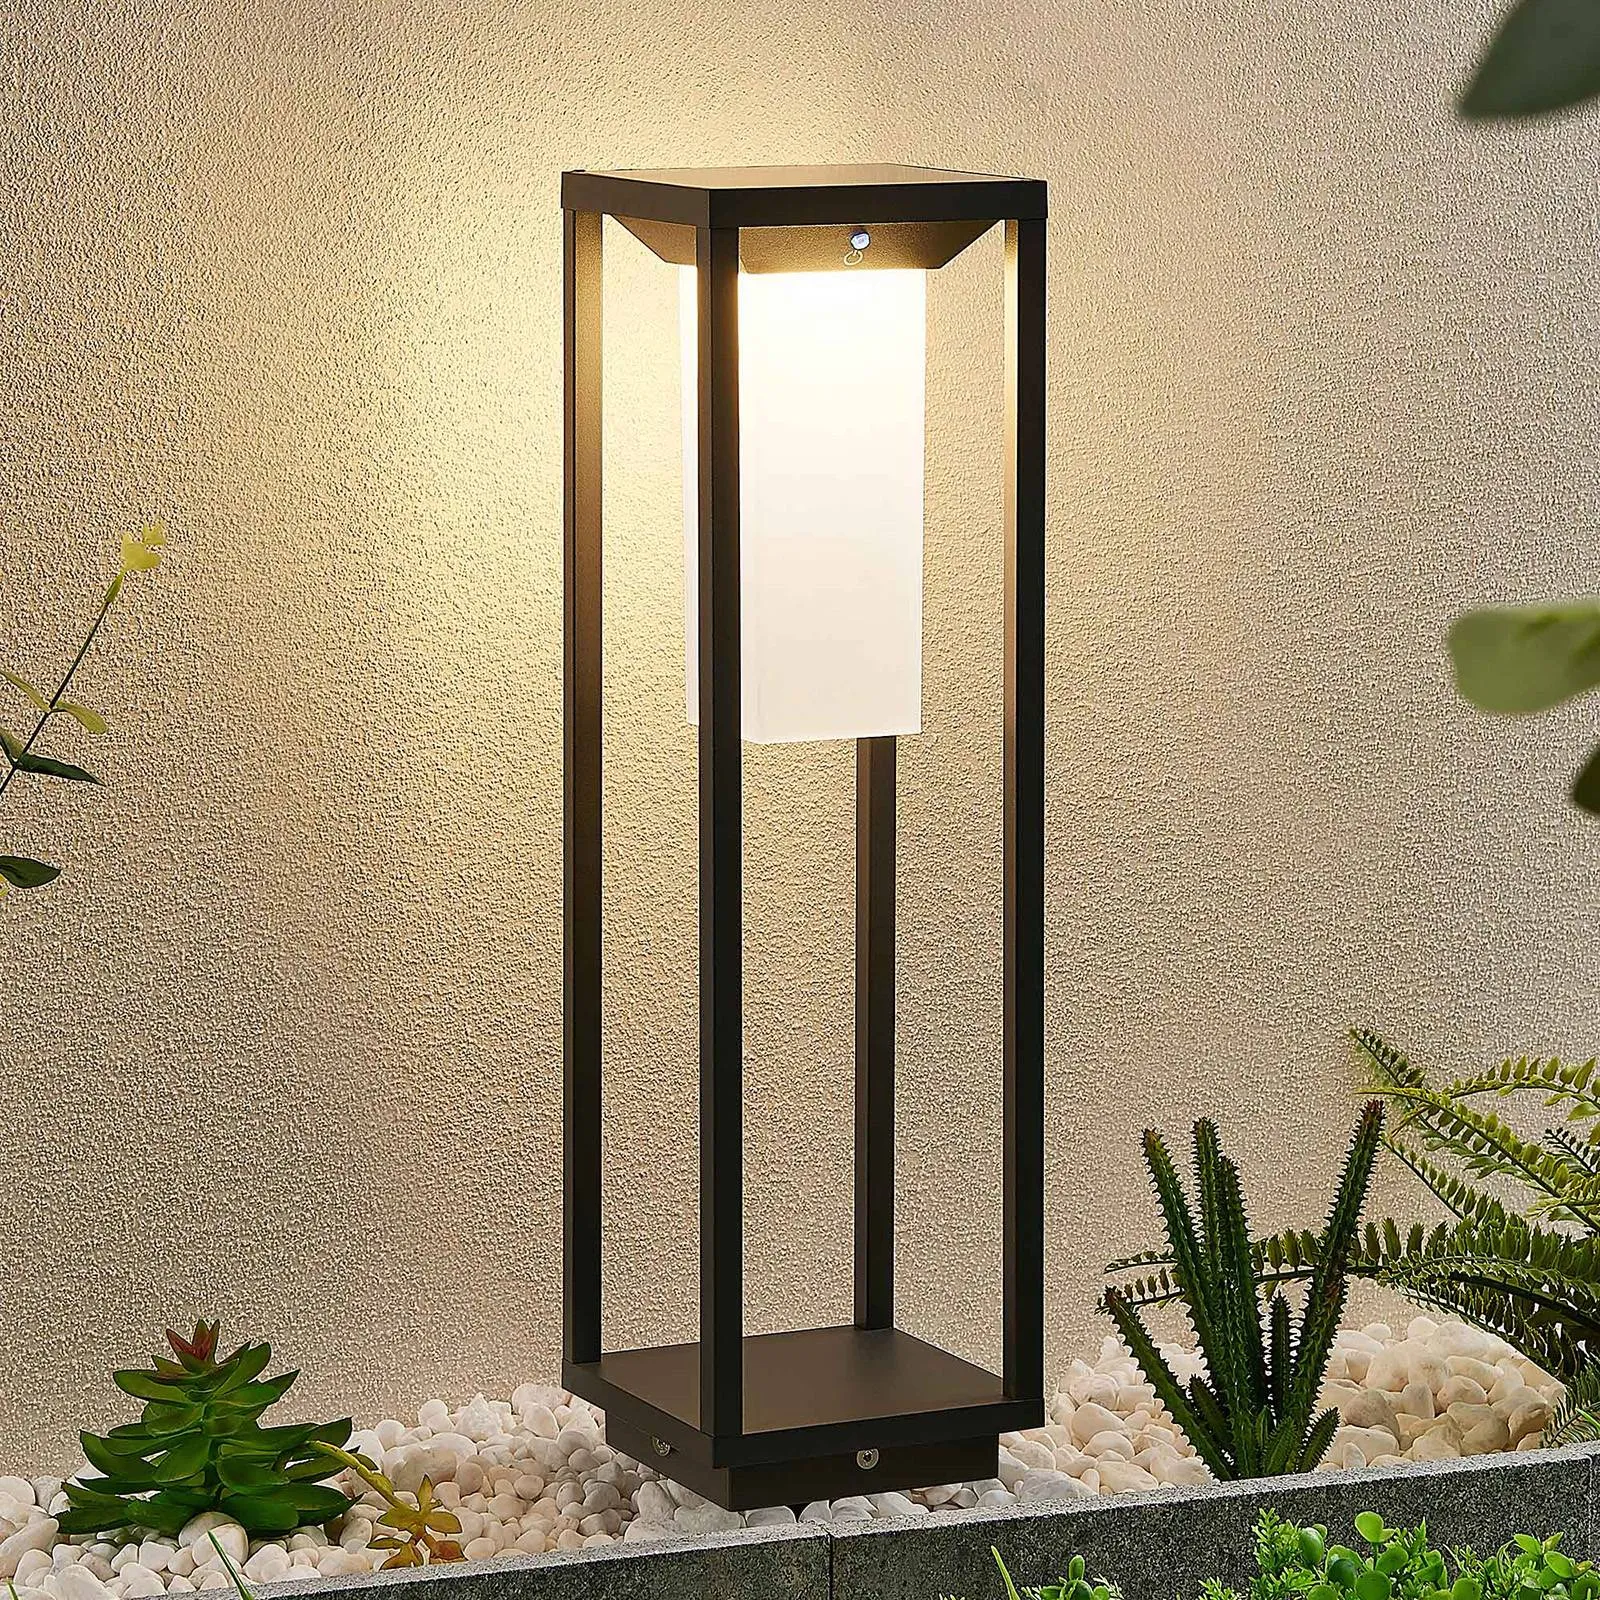 Lucande Eliel LED solar pillar light, 50 cm